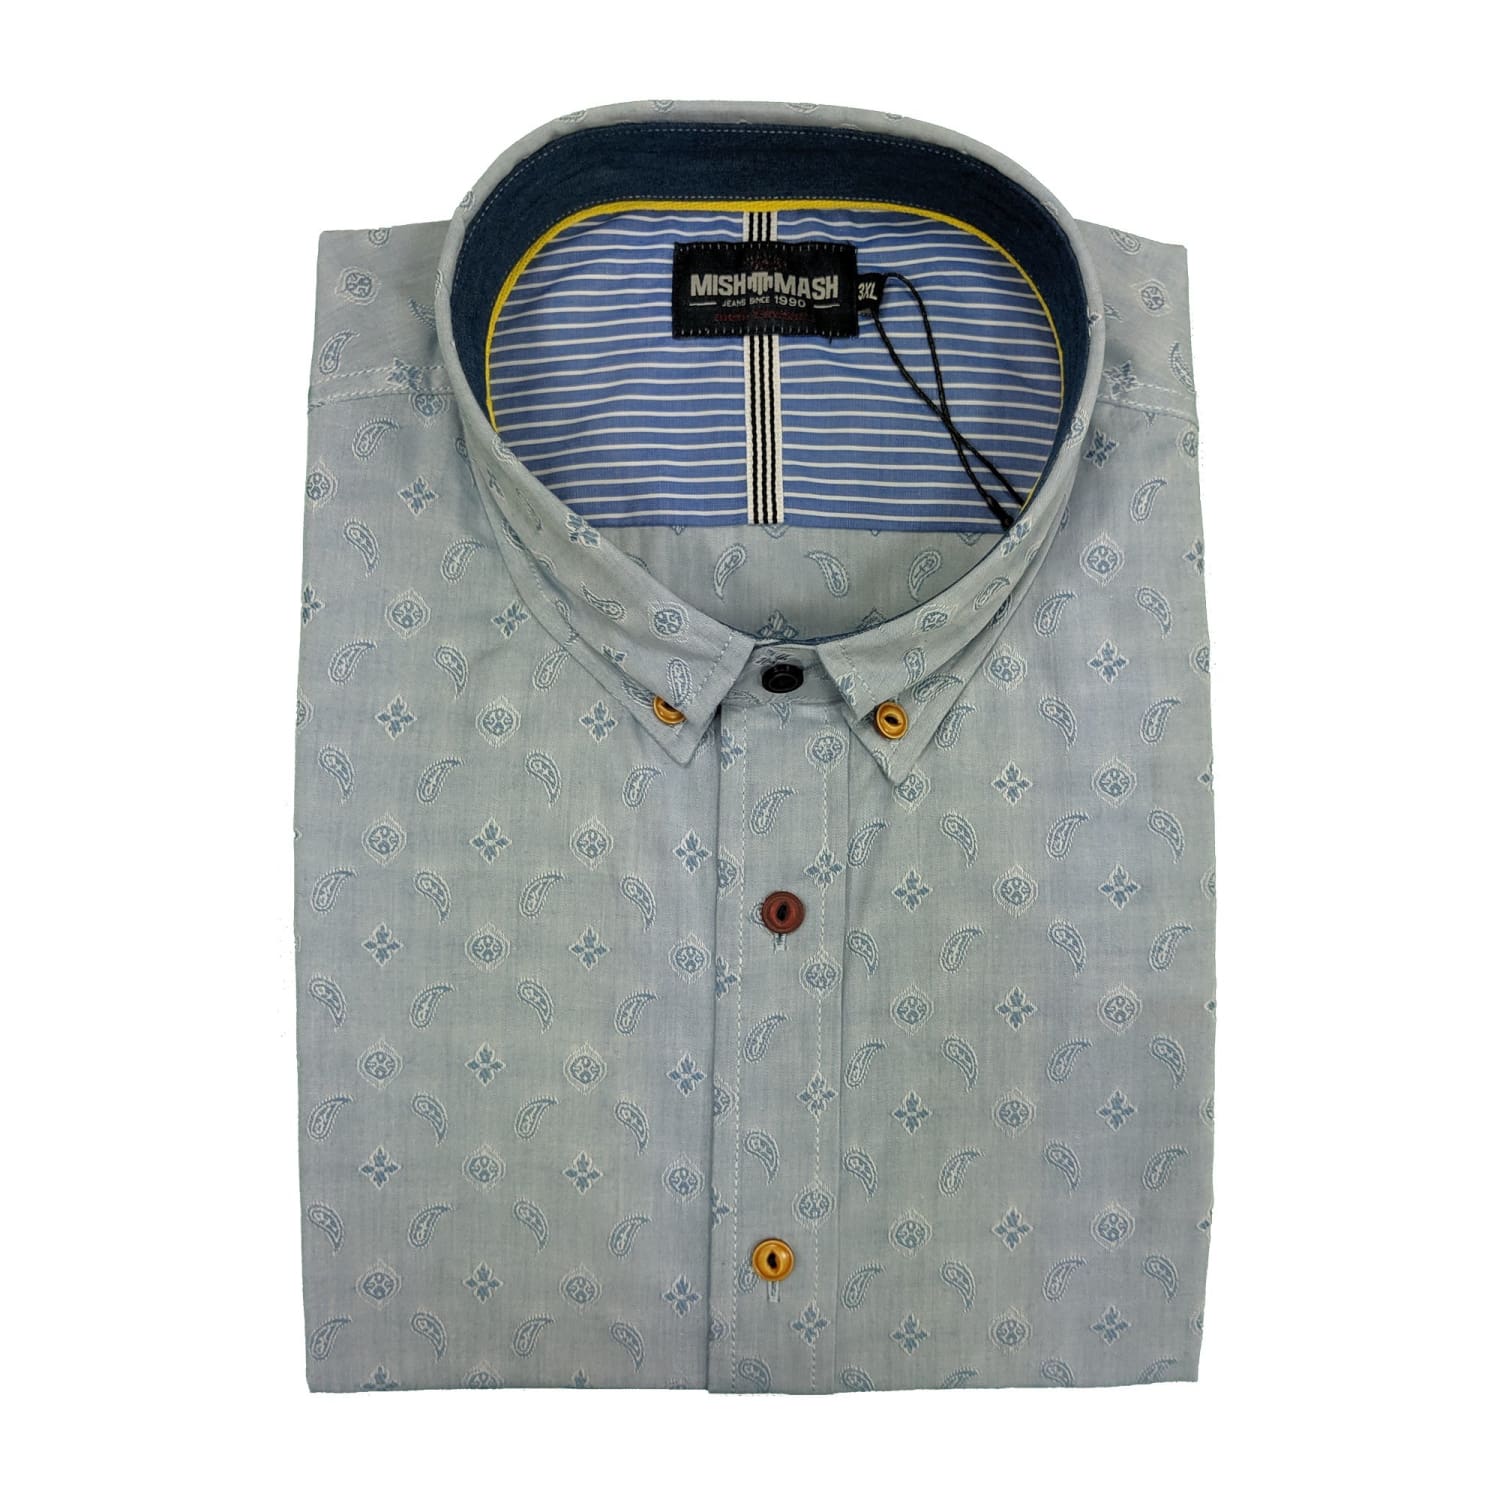 Mish Mash S/S Shirt - 2293 - Cuckoo - Blue 1